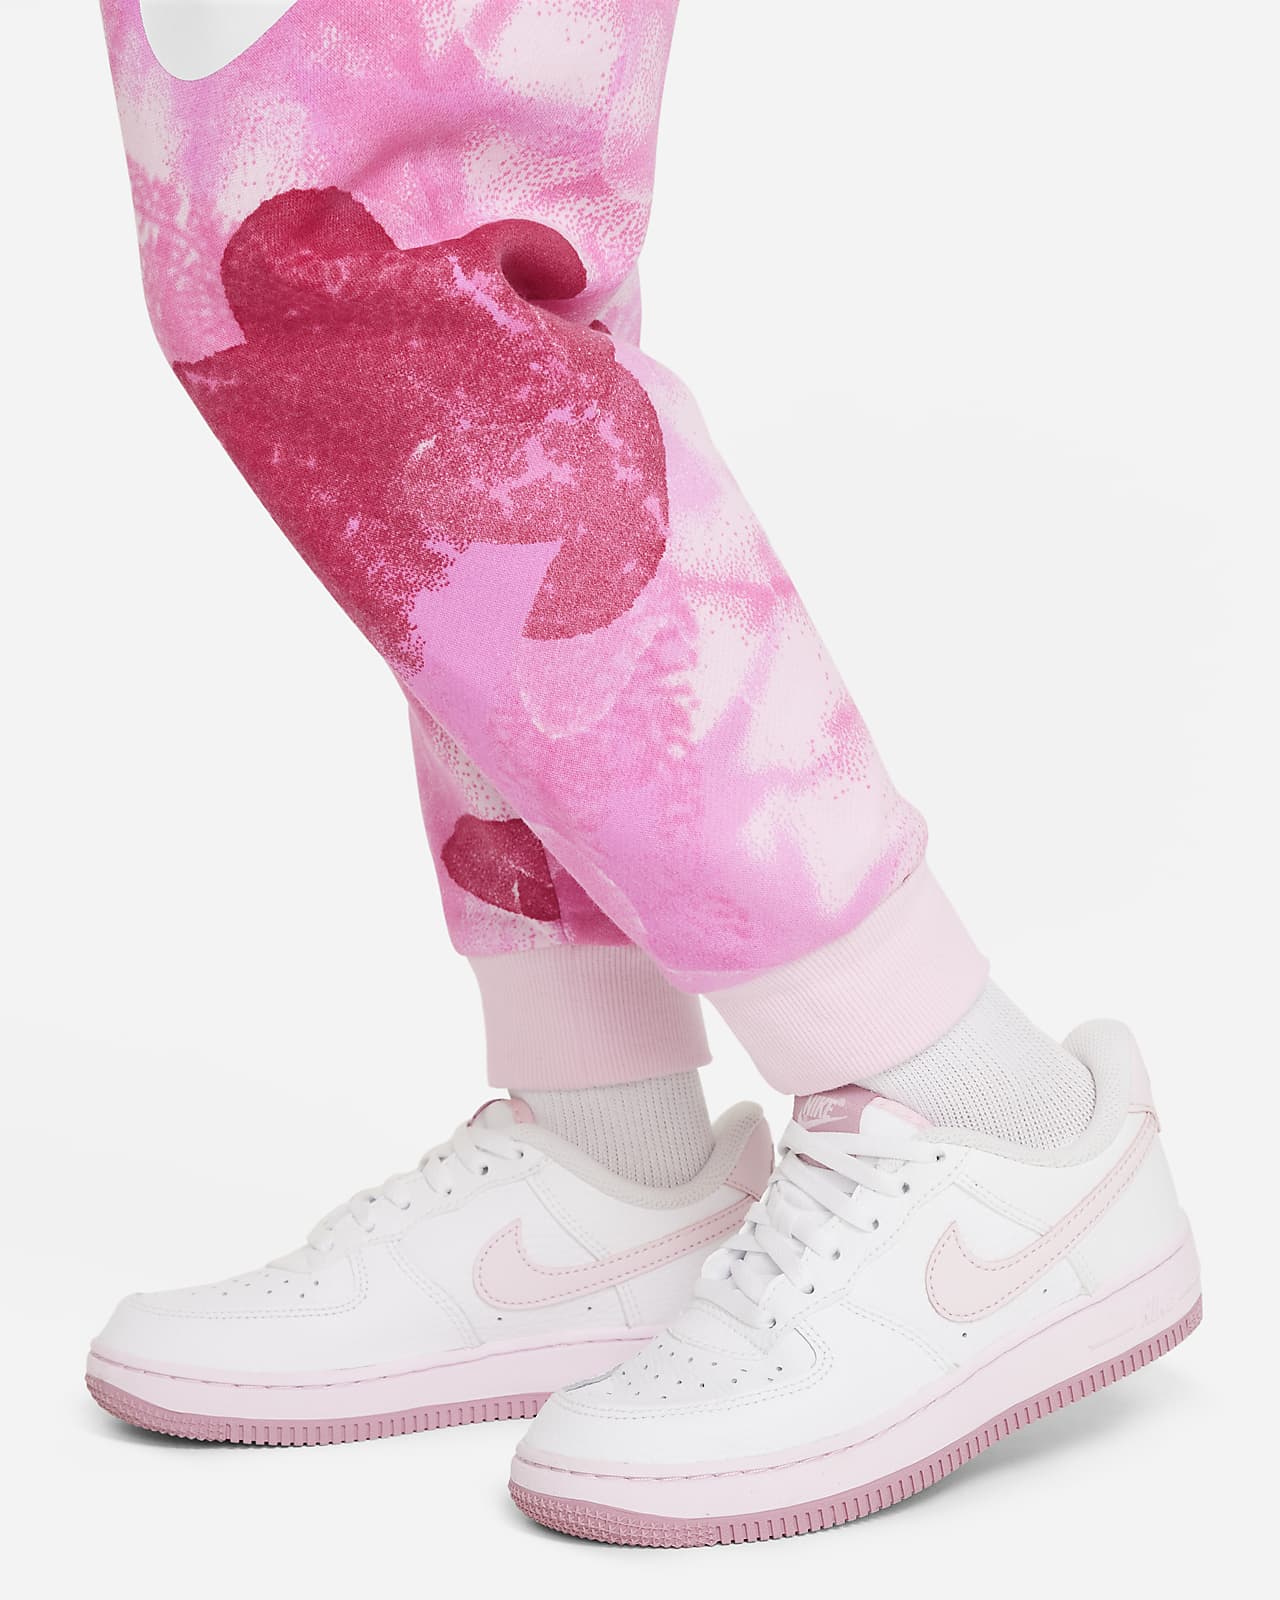 Sci-Dye Joggers Pants. Little Club Nike Kids